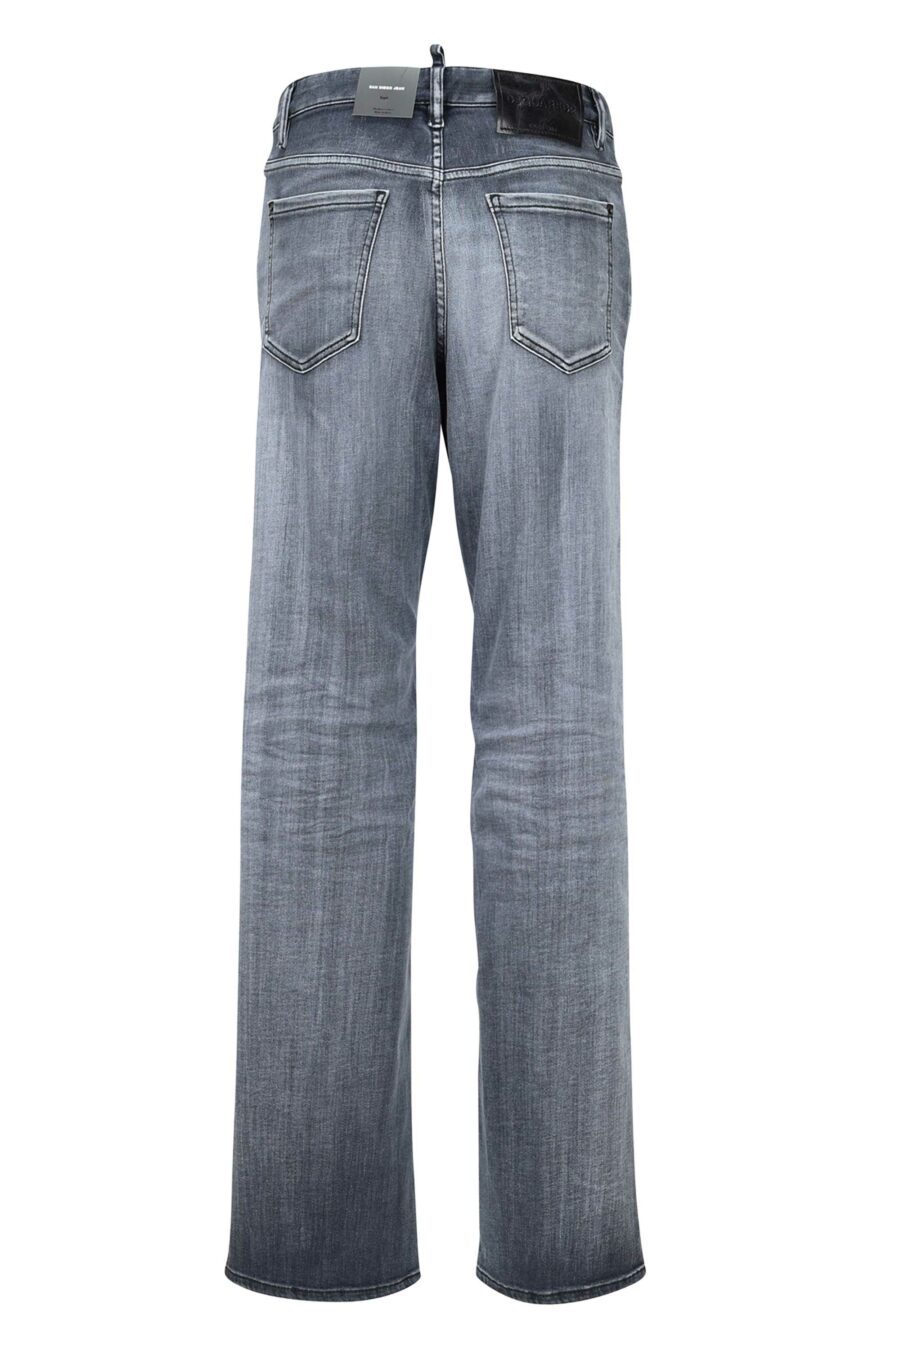 Jeans "San Diego jean" black worn - 8054148230845 2